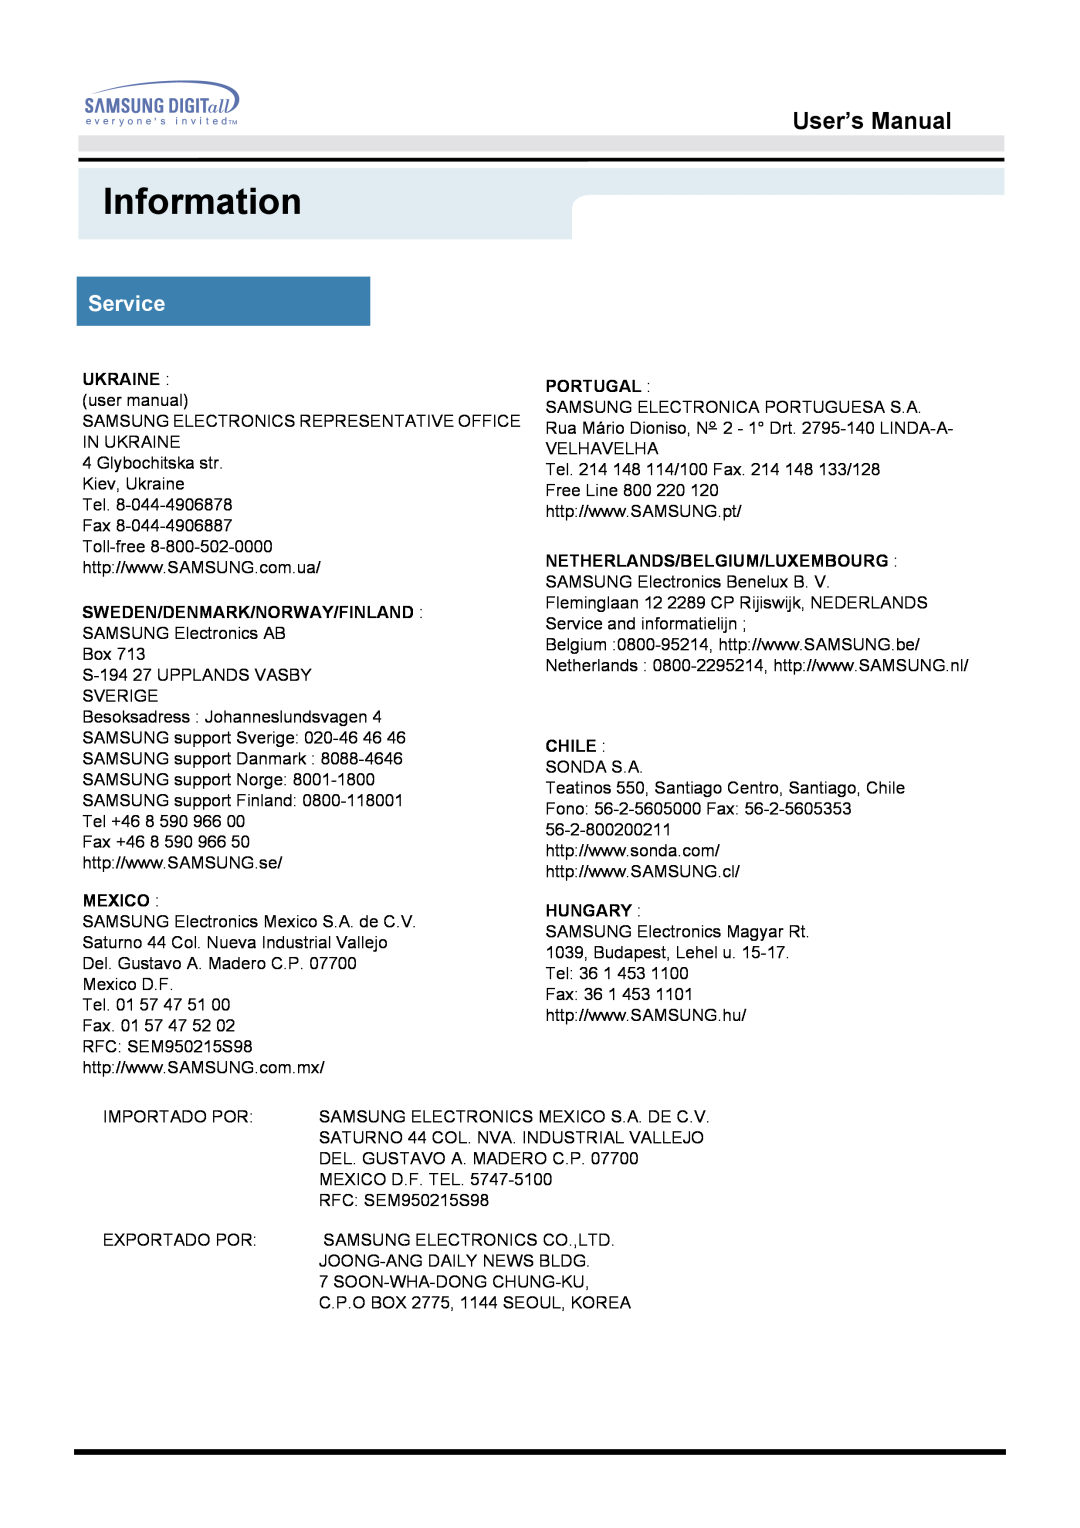 Samsung 151D Information, User’s Manual, Service, UKRAINE user manual, Sweden/Denmark/Norway/Finland, Mexico, Portugal 